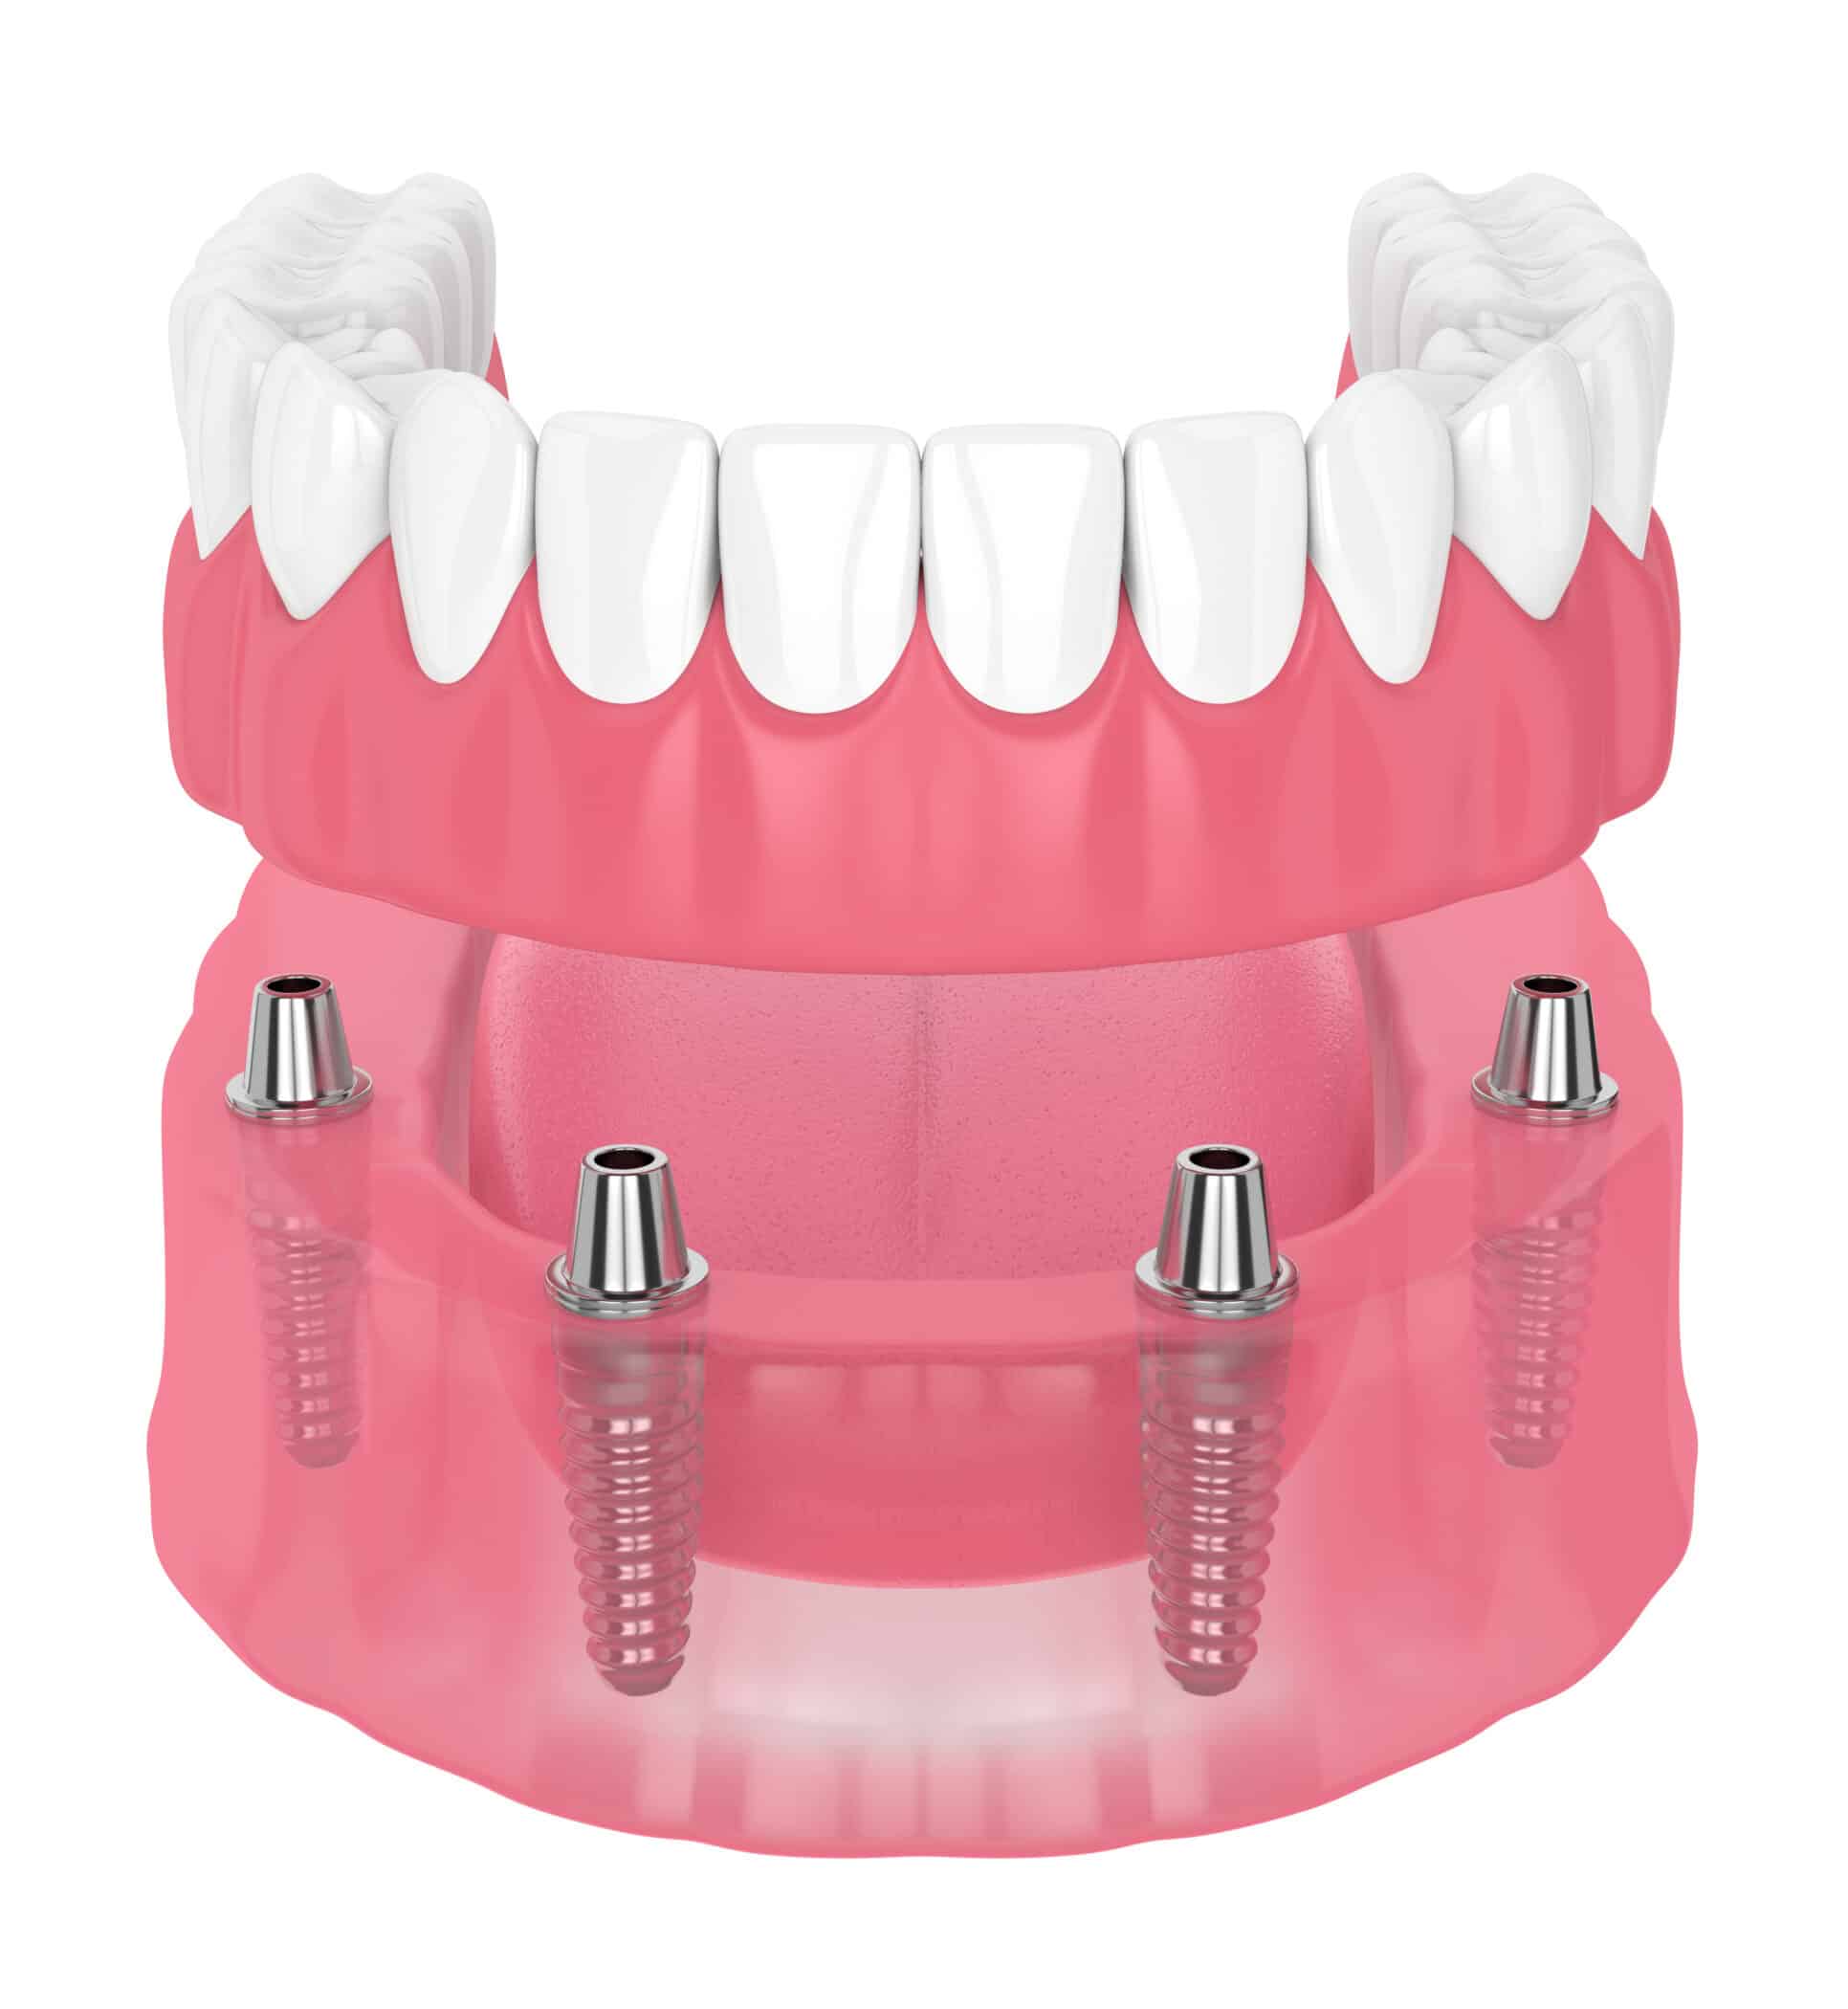 3d render of removable full implant denture